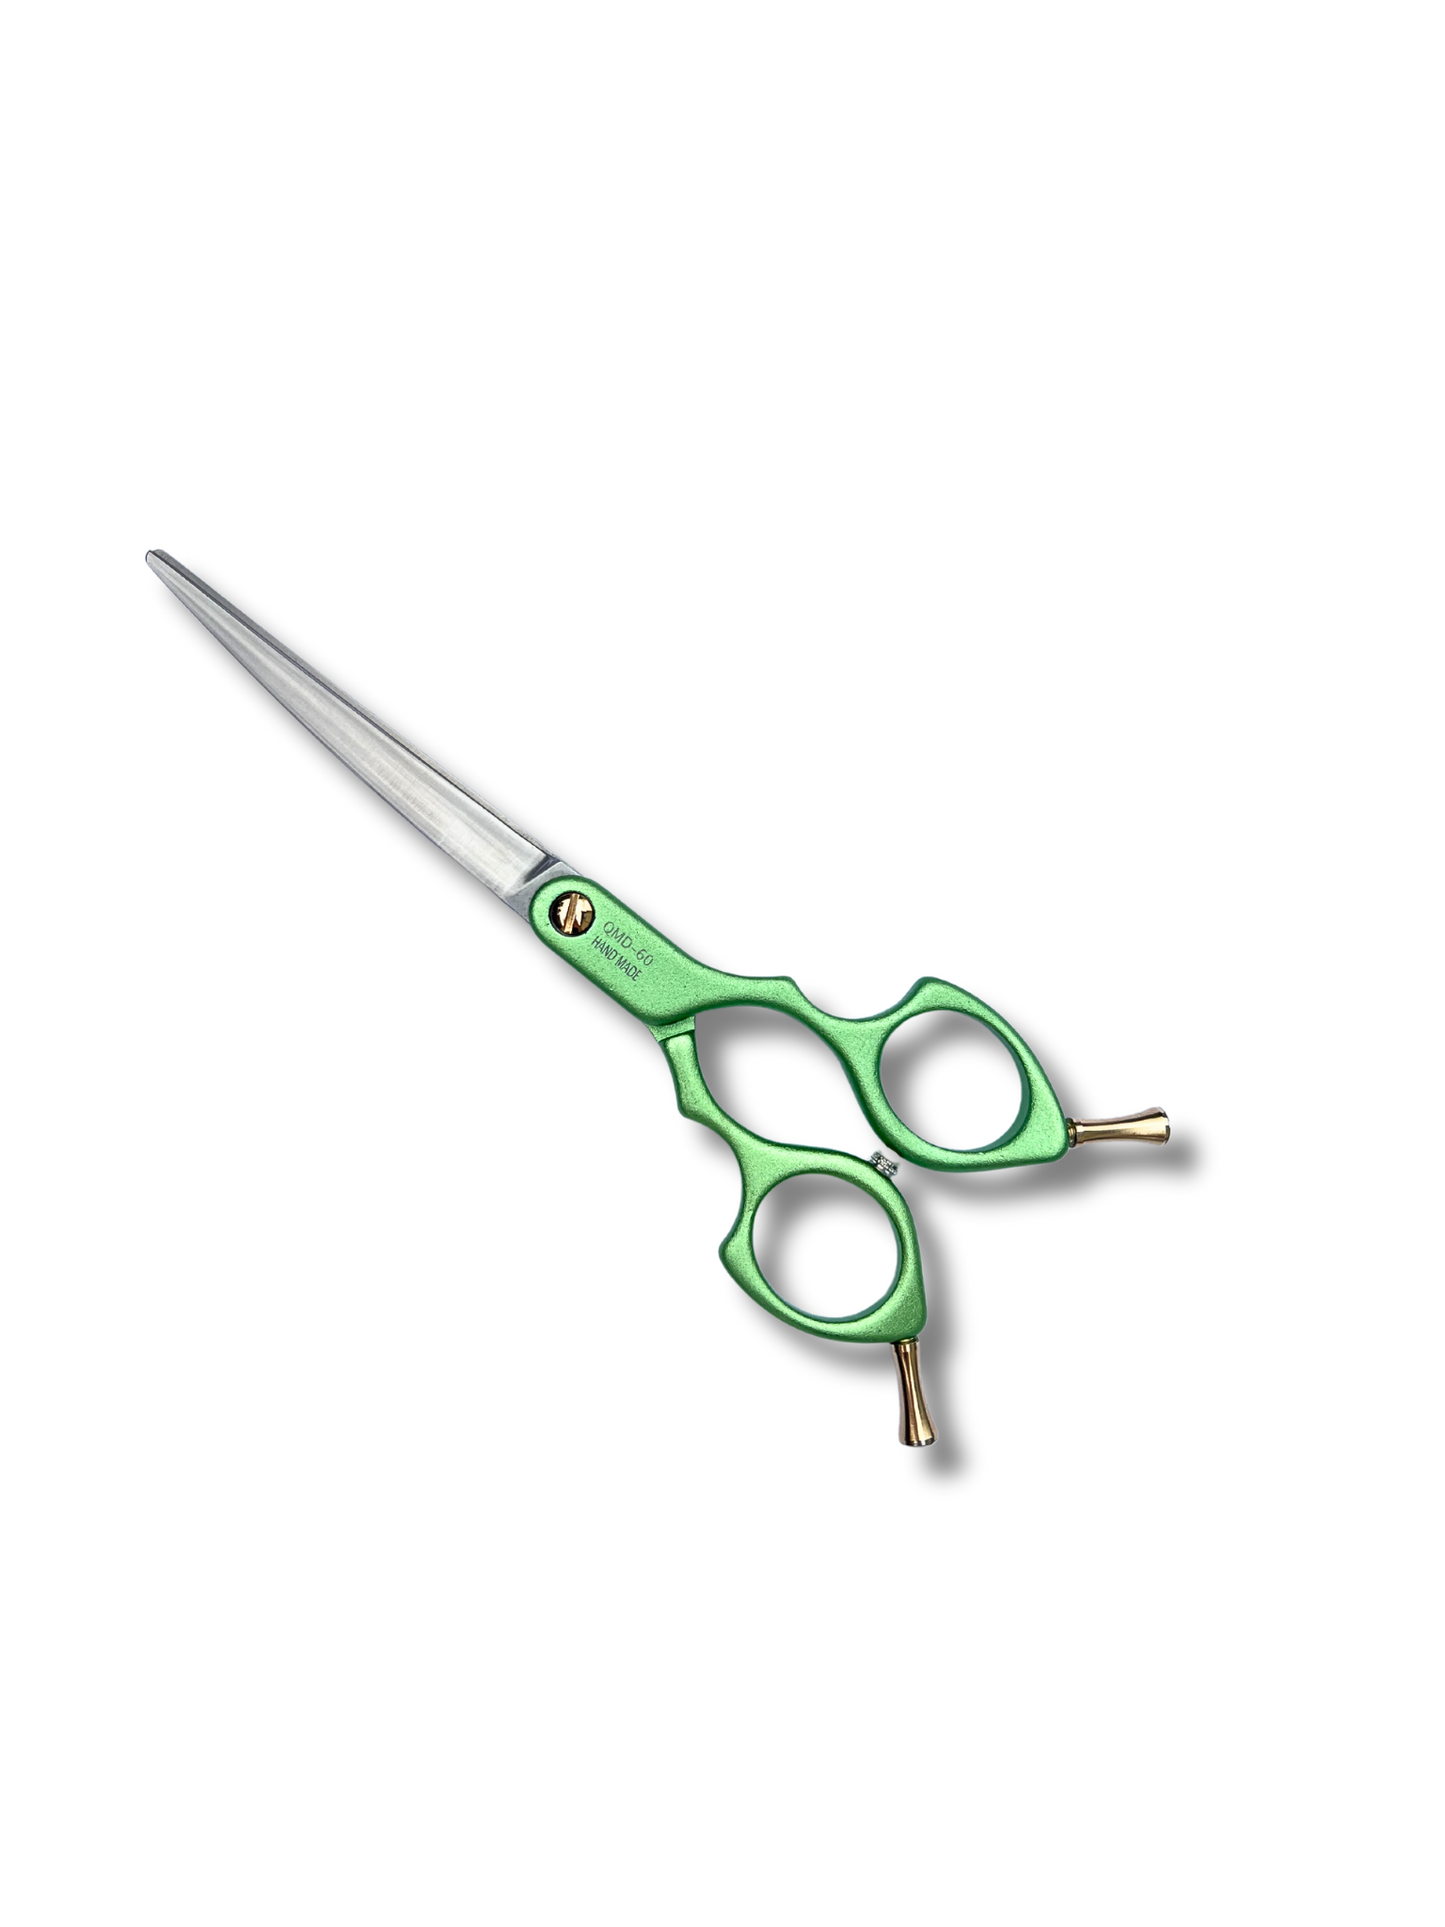 QMD-60 professional curved scissor 6.0"